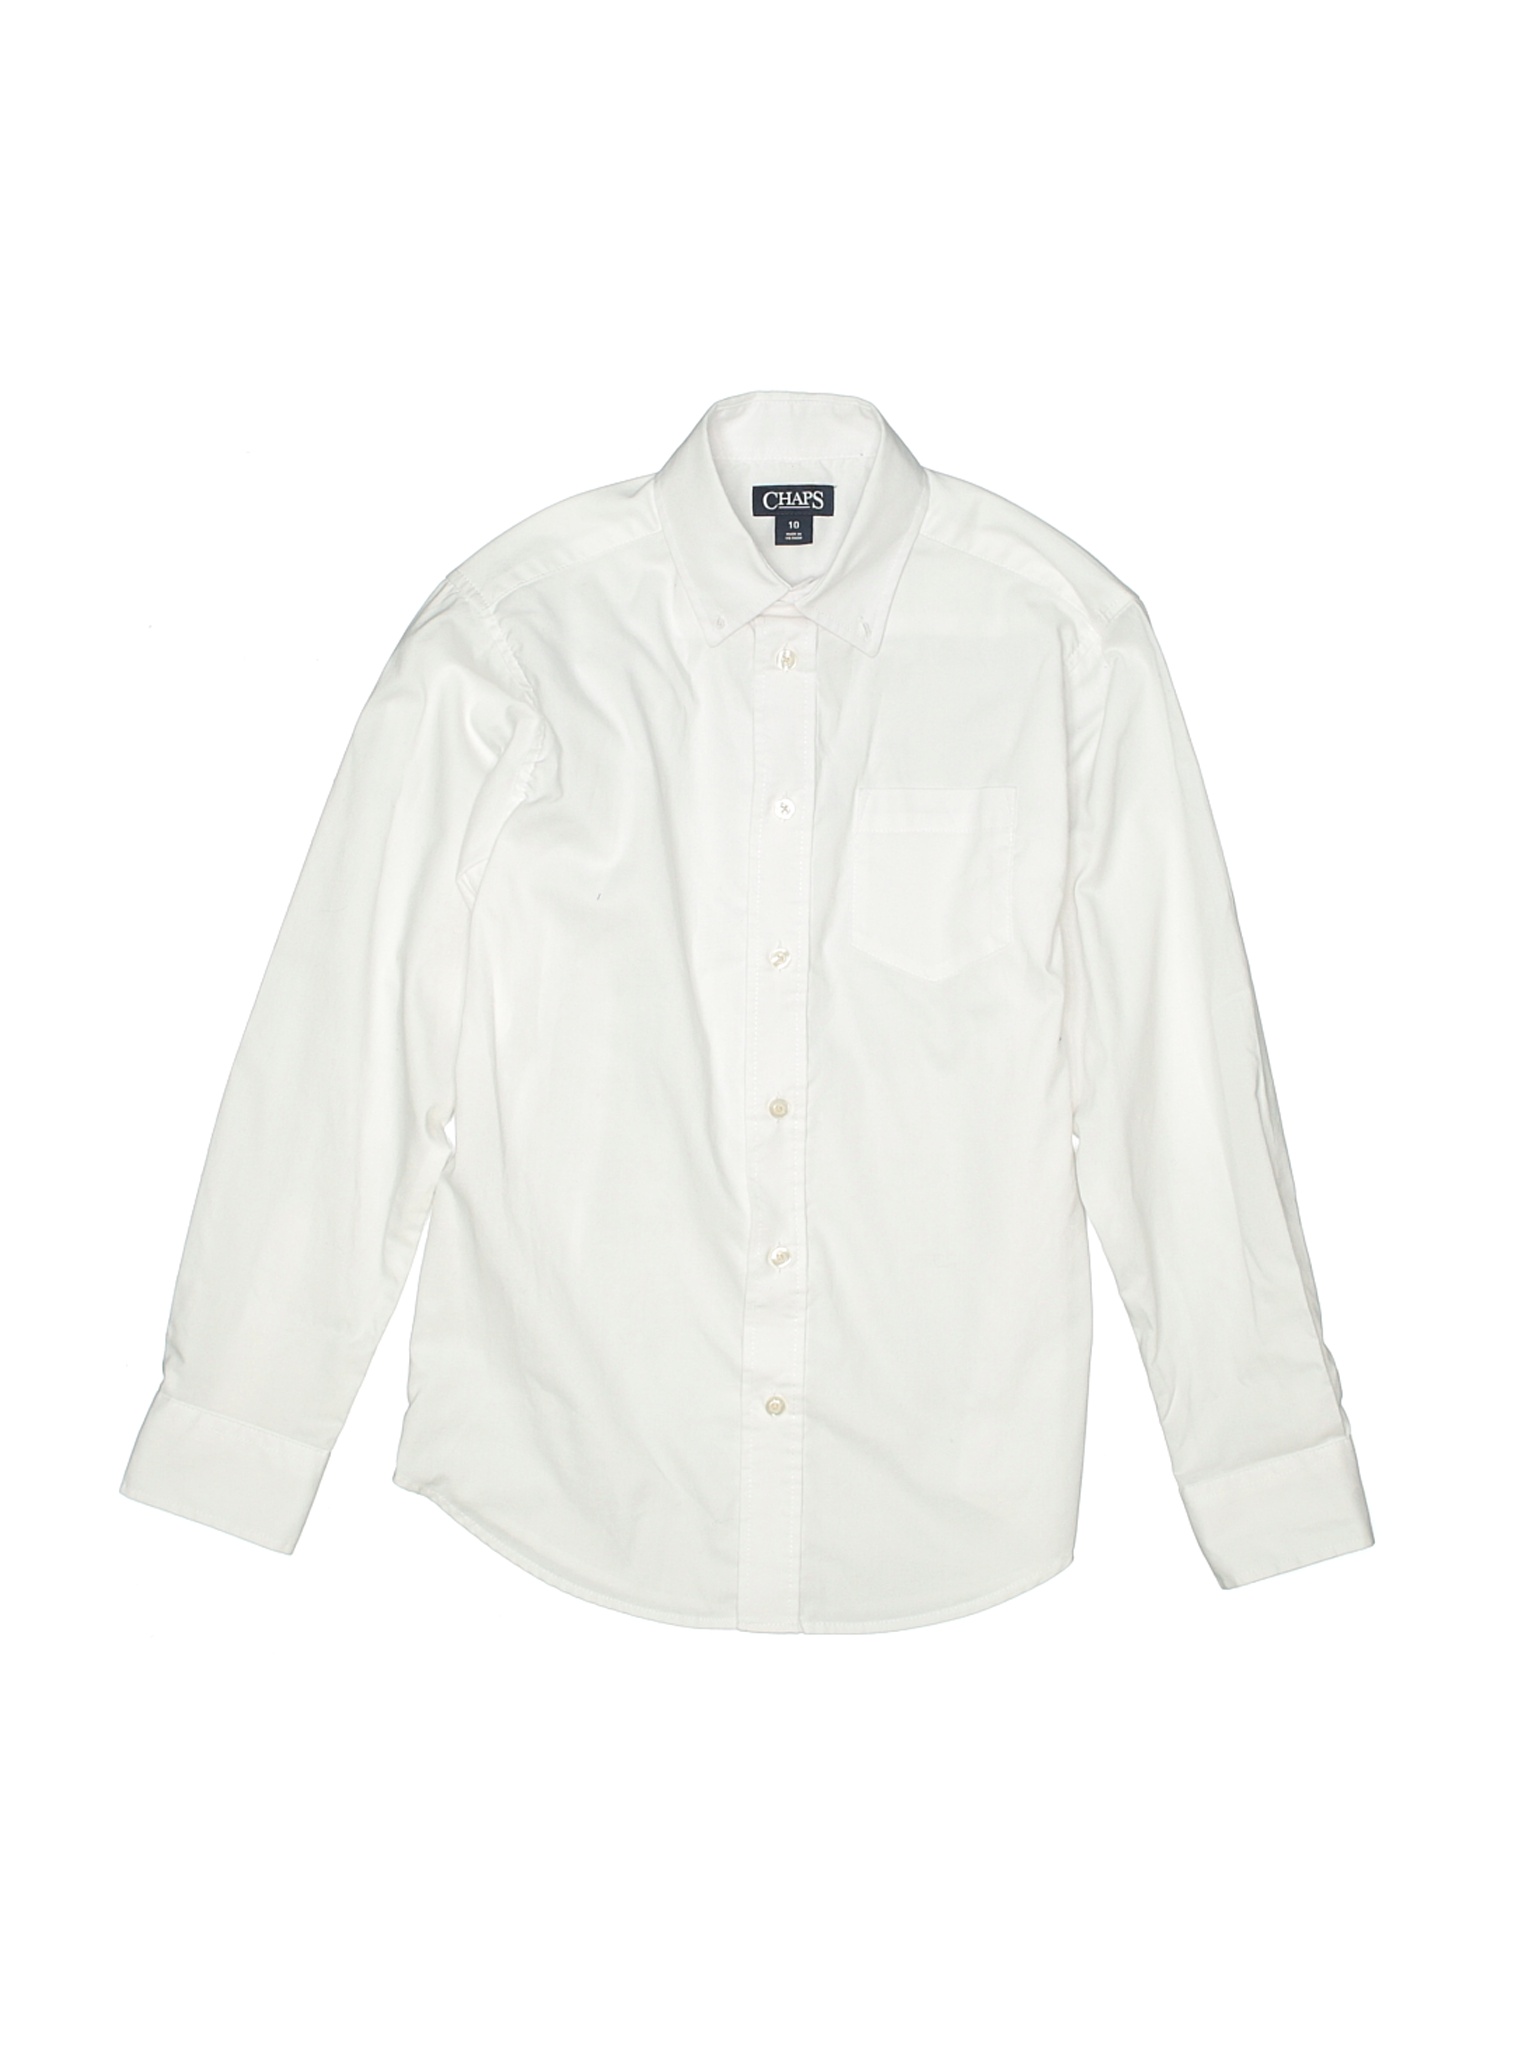 Chaps Boys White Long Sleeve Button-Down Shirt 10 | eBay